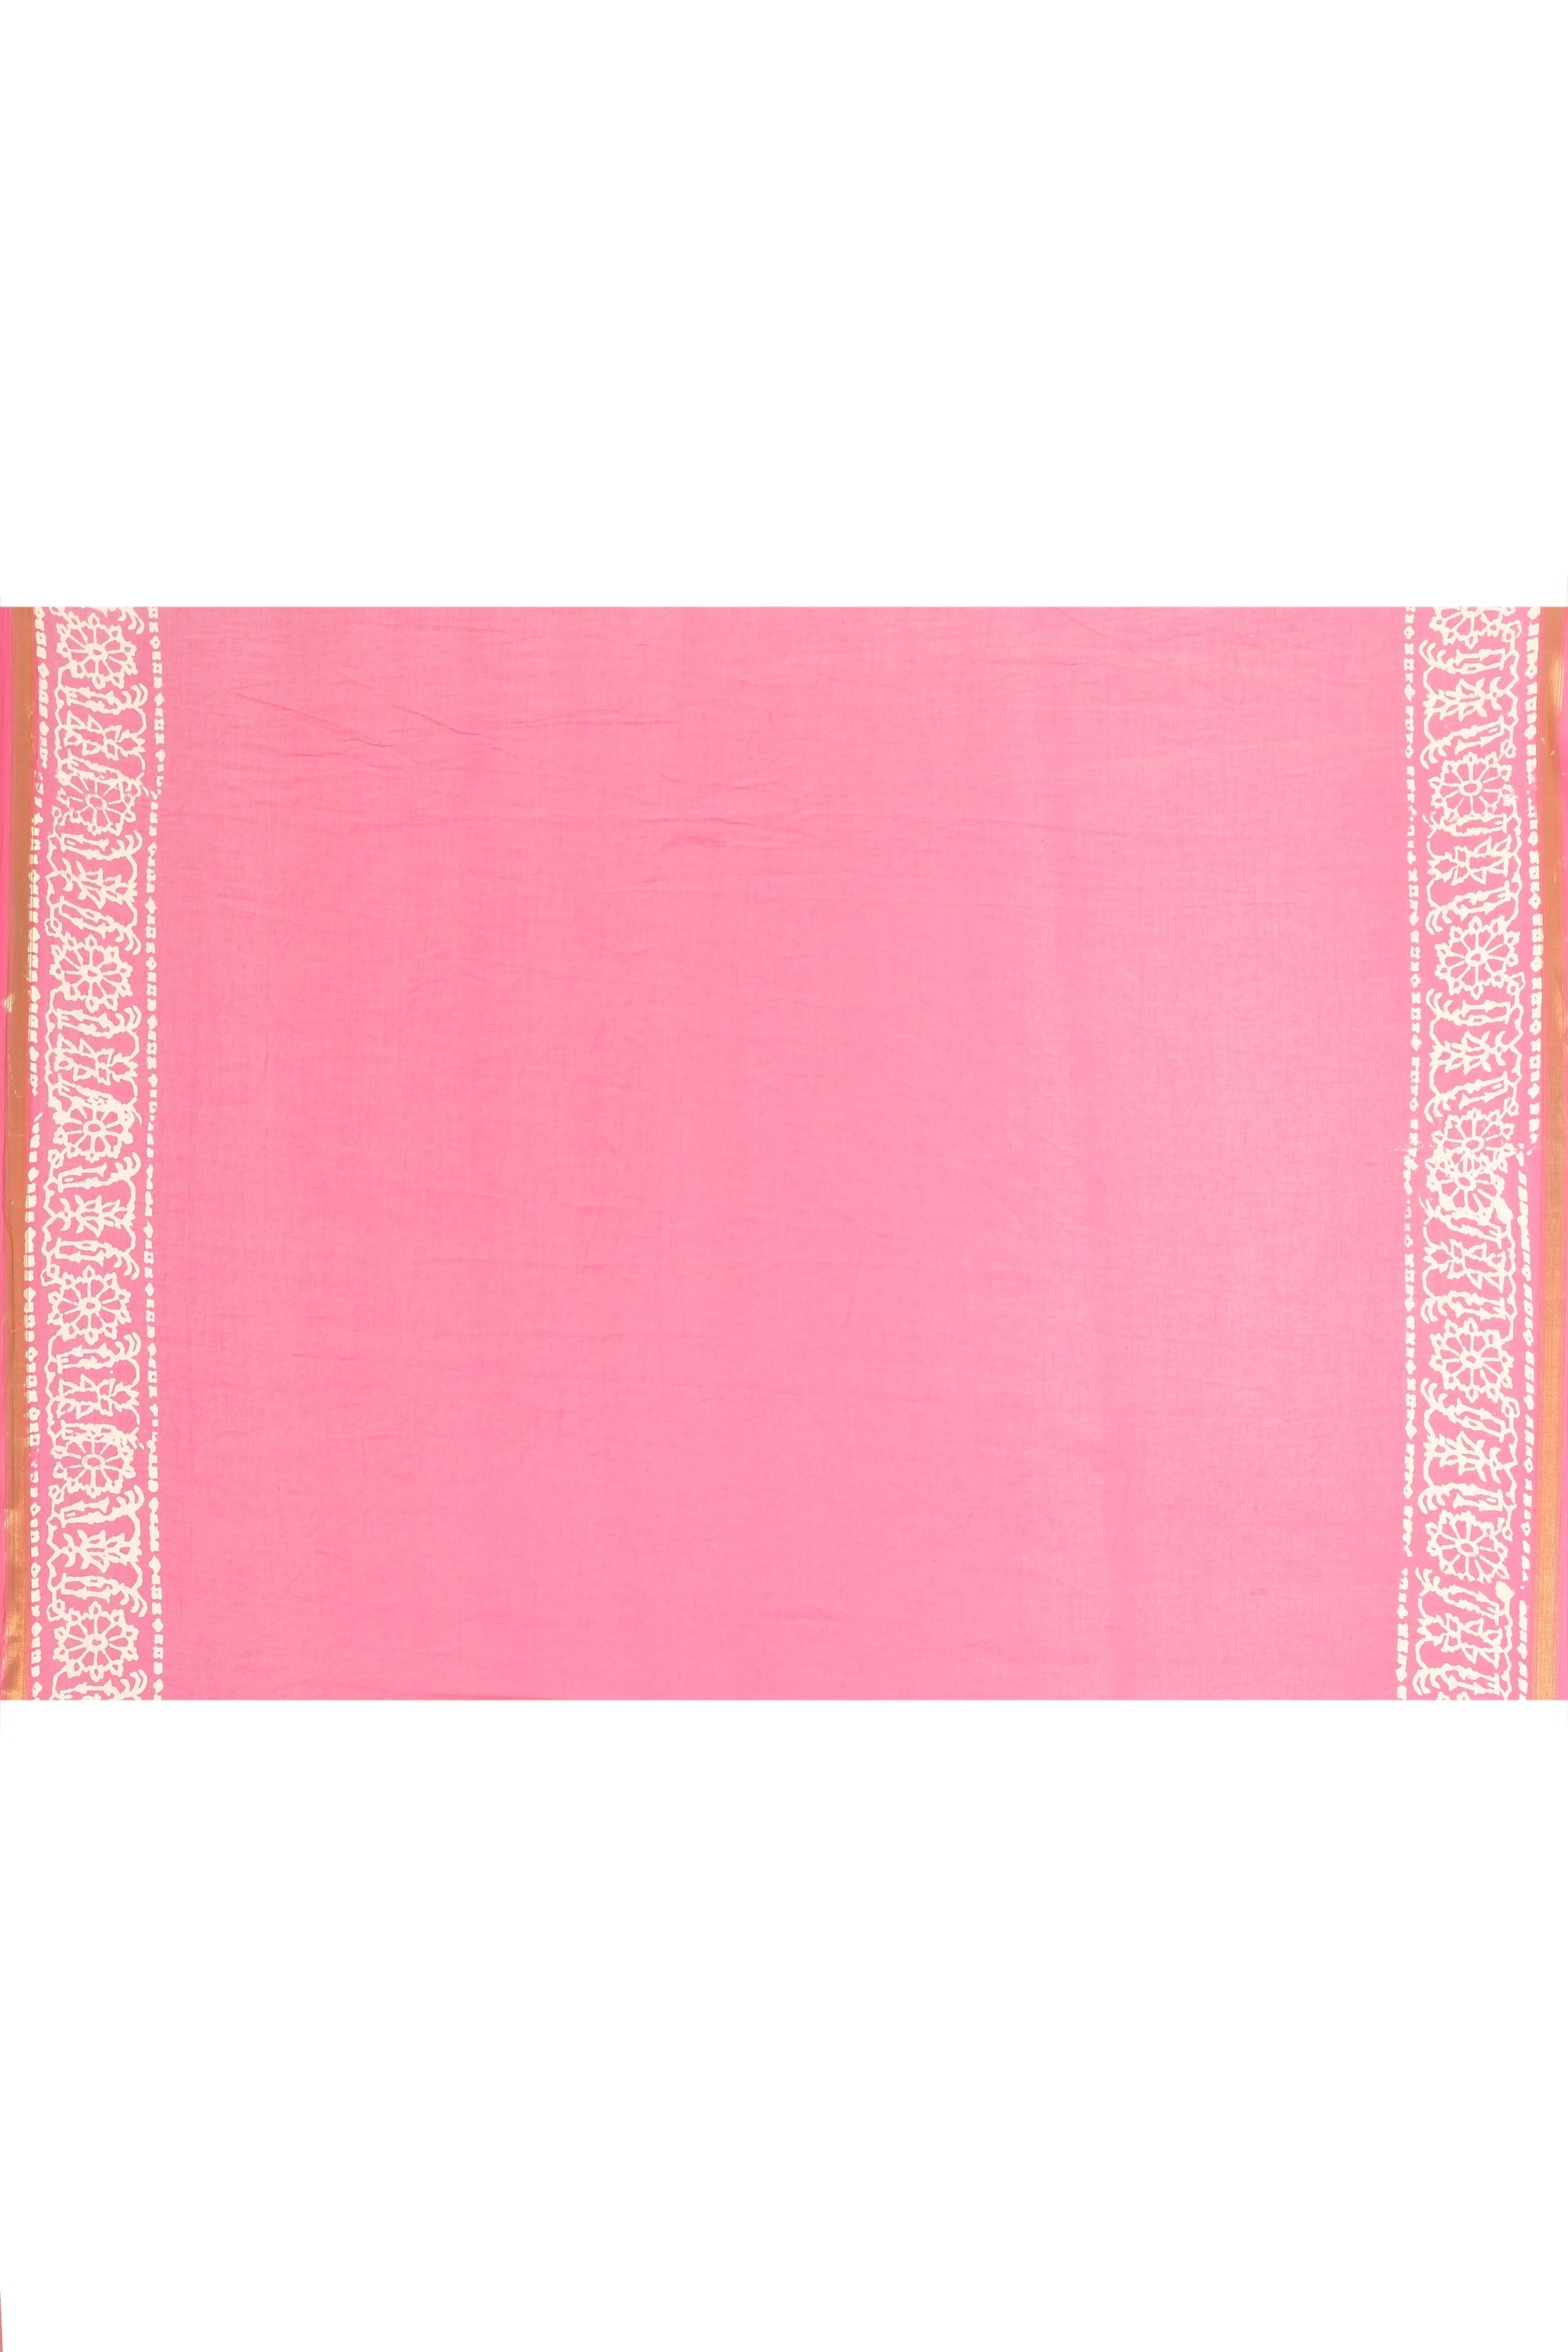 Women's Hand Block Printed Pink Cotton Mul Mul Zari Boarder Saree With Blouse - Saras The Label